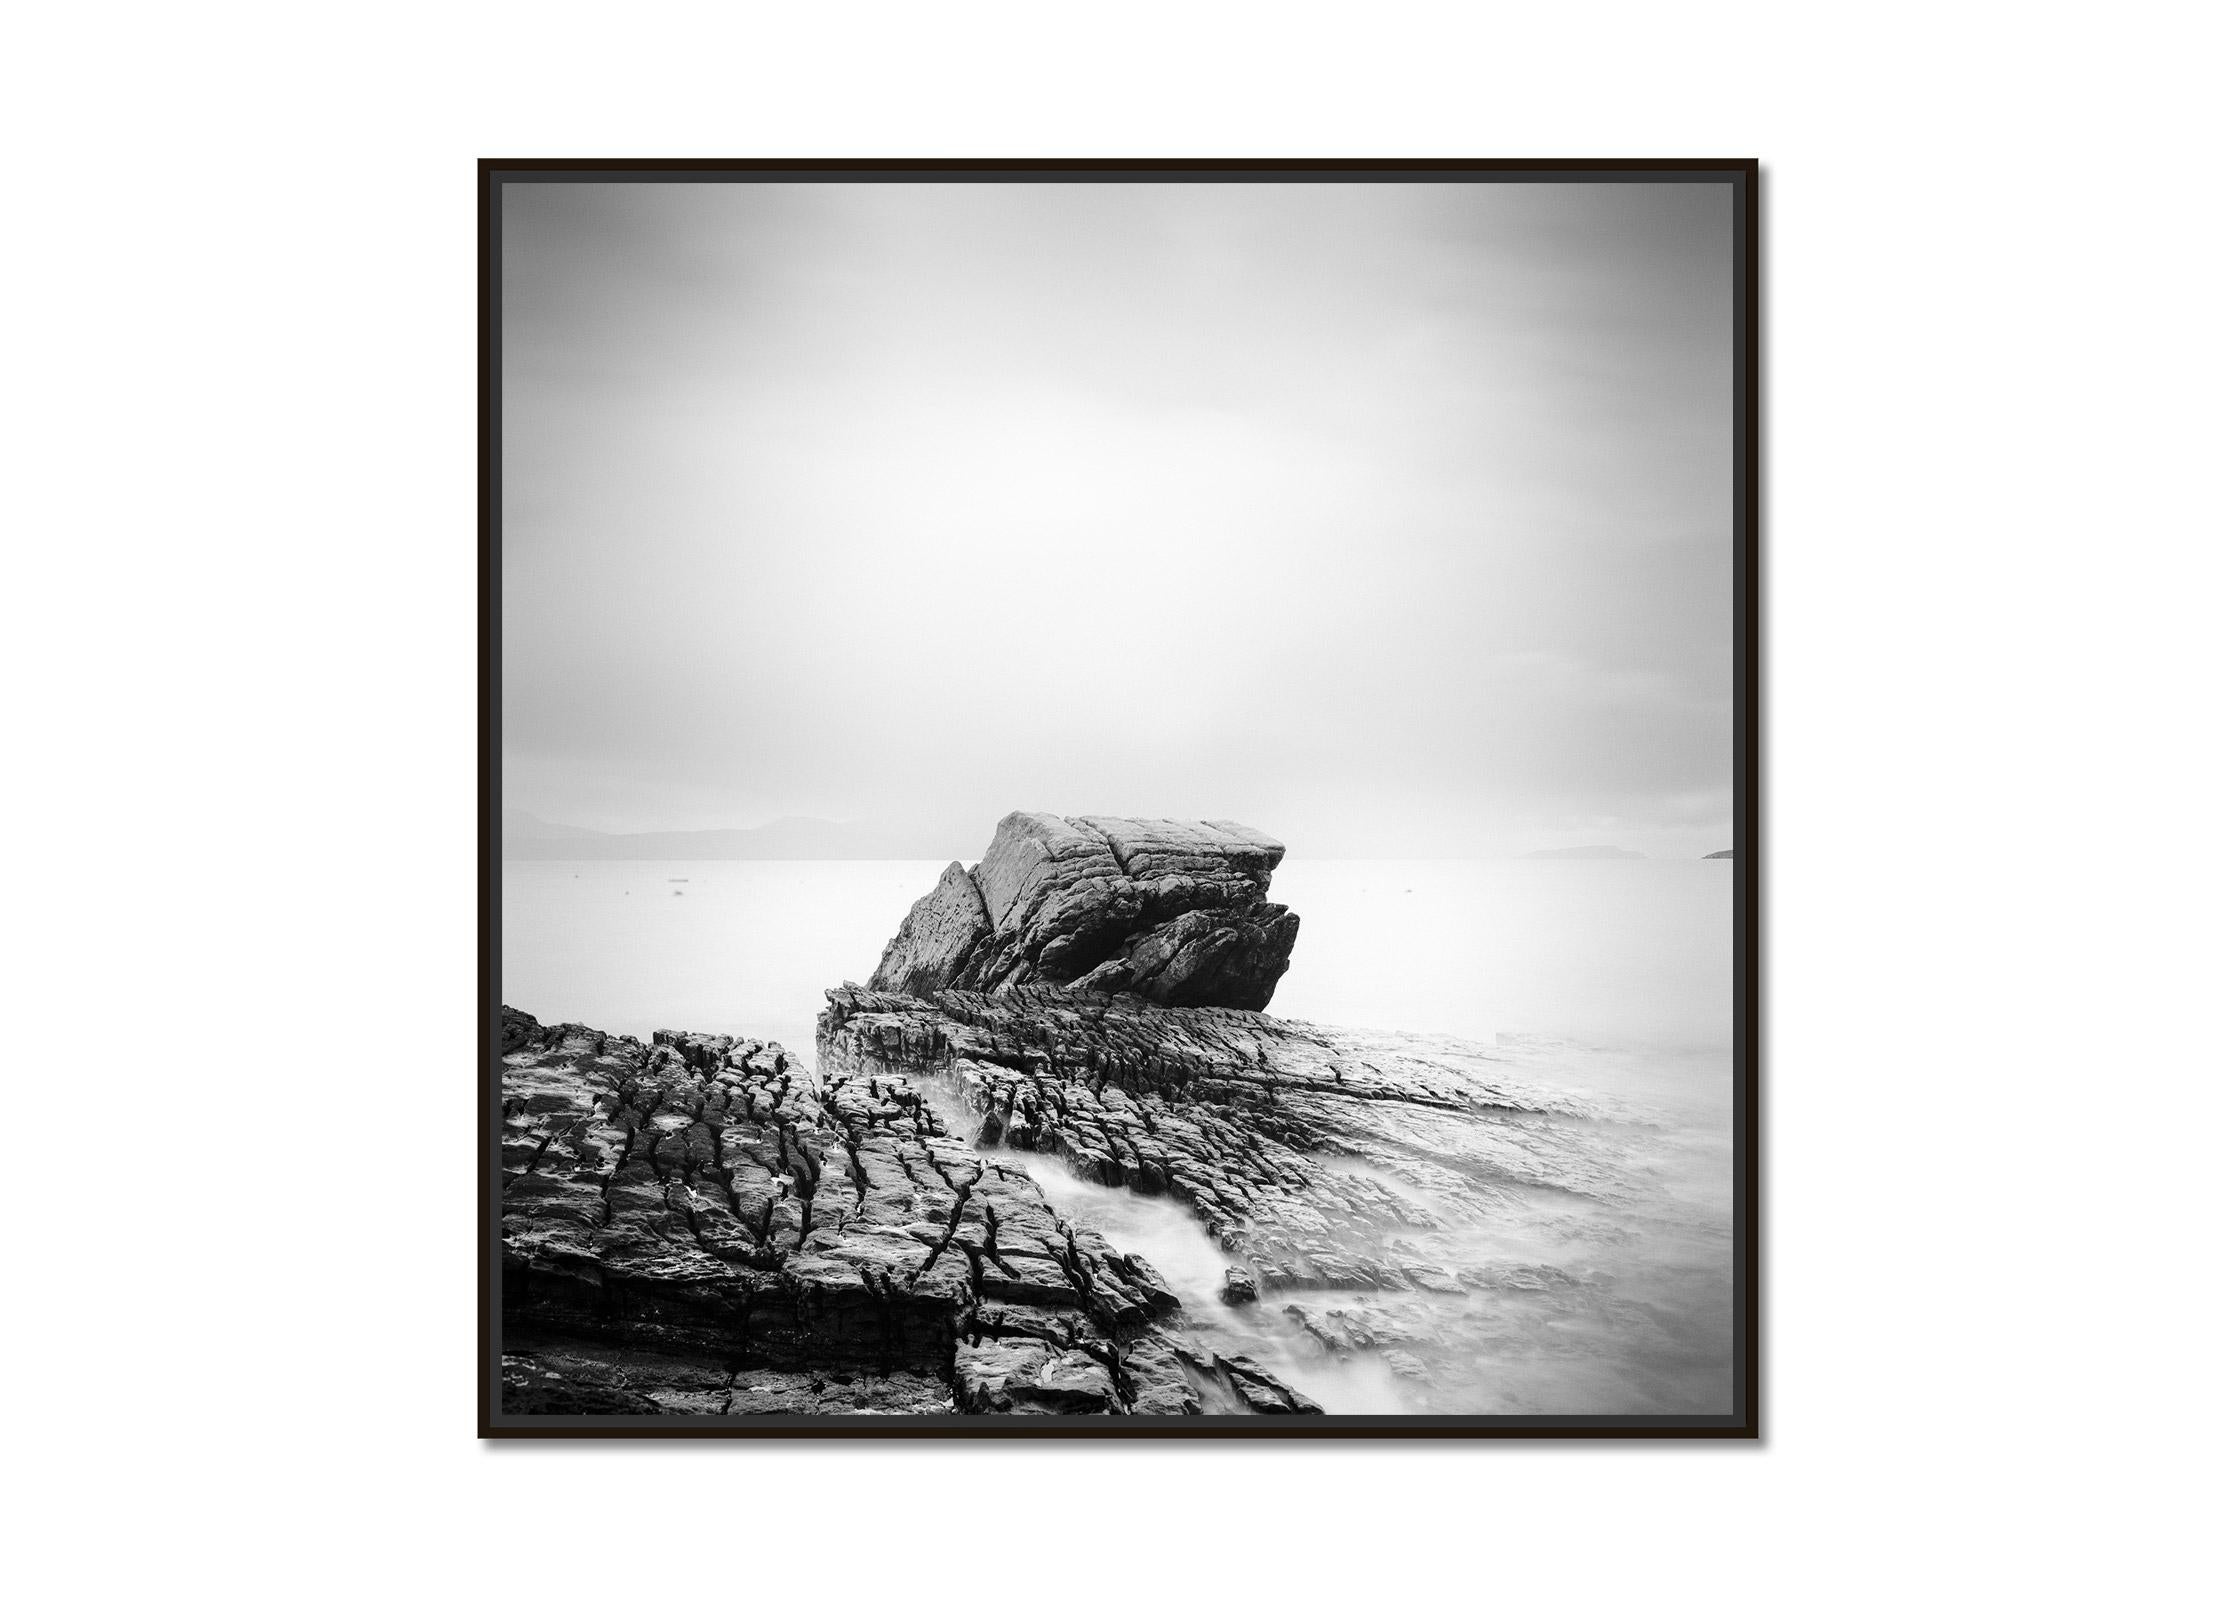 Fissured Rock, scottish Coast, Isle of Sky, minimalist black and white landscape - Photograph by Gerald Berghammer